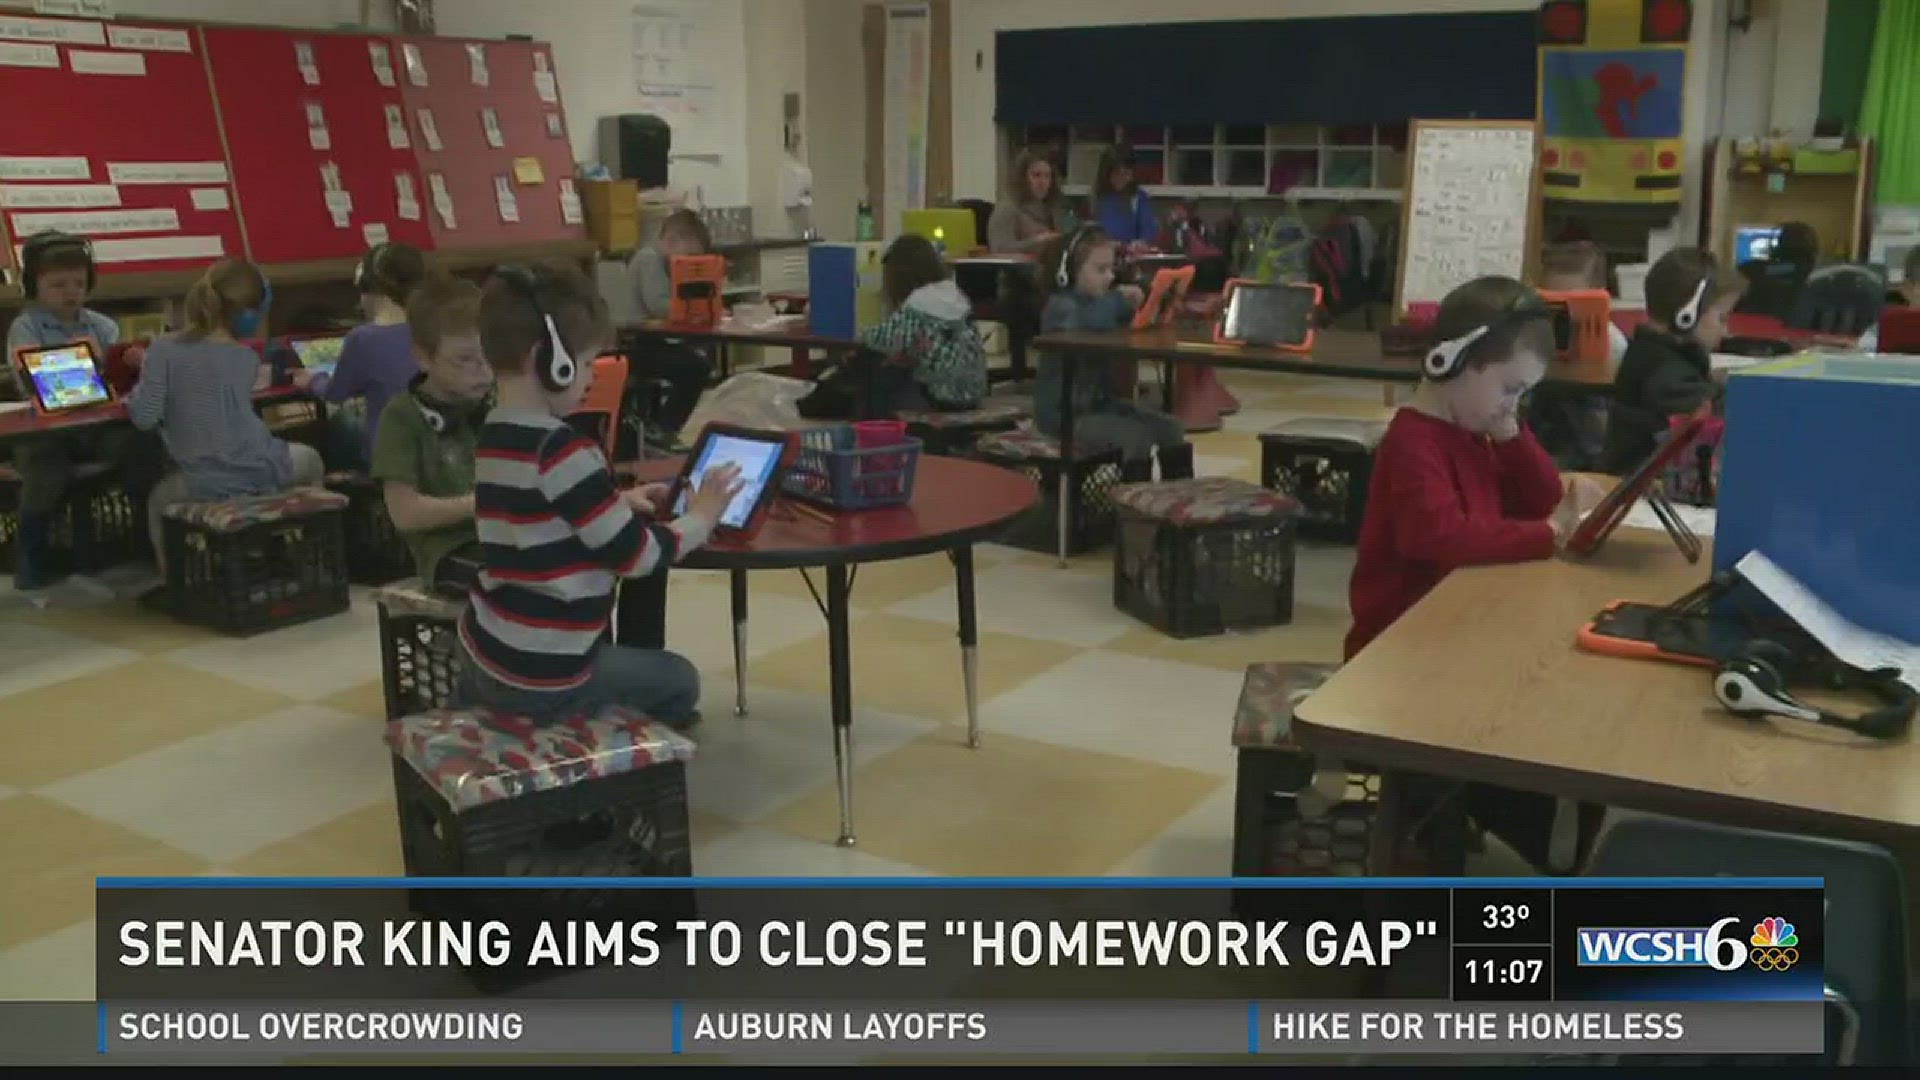 Sen. King aims to close "homework gap"